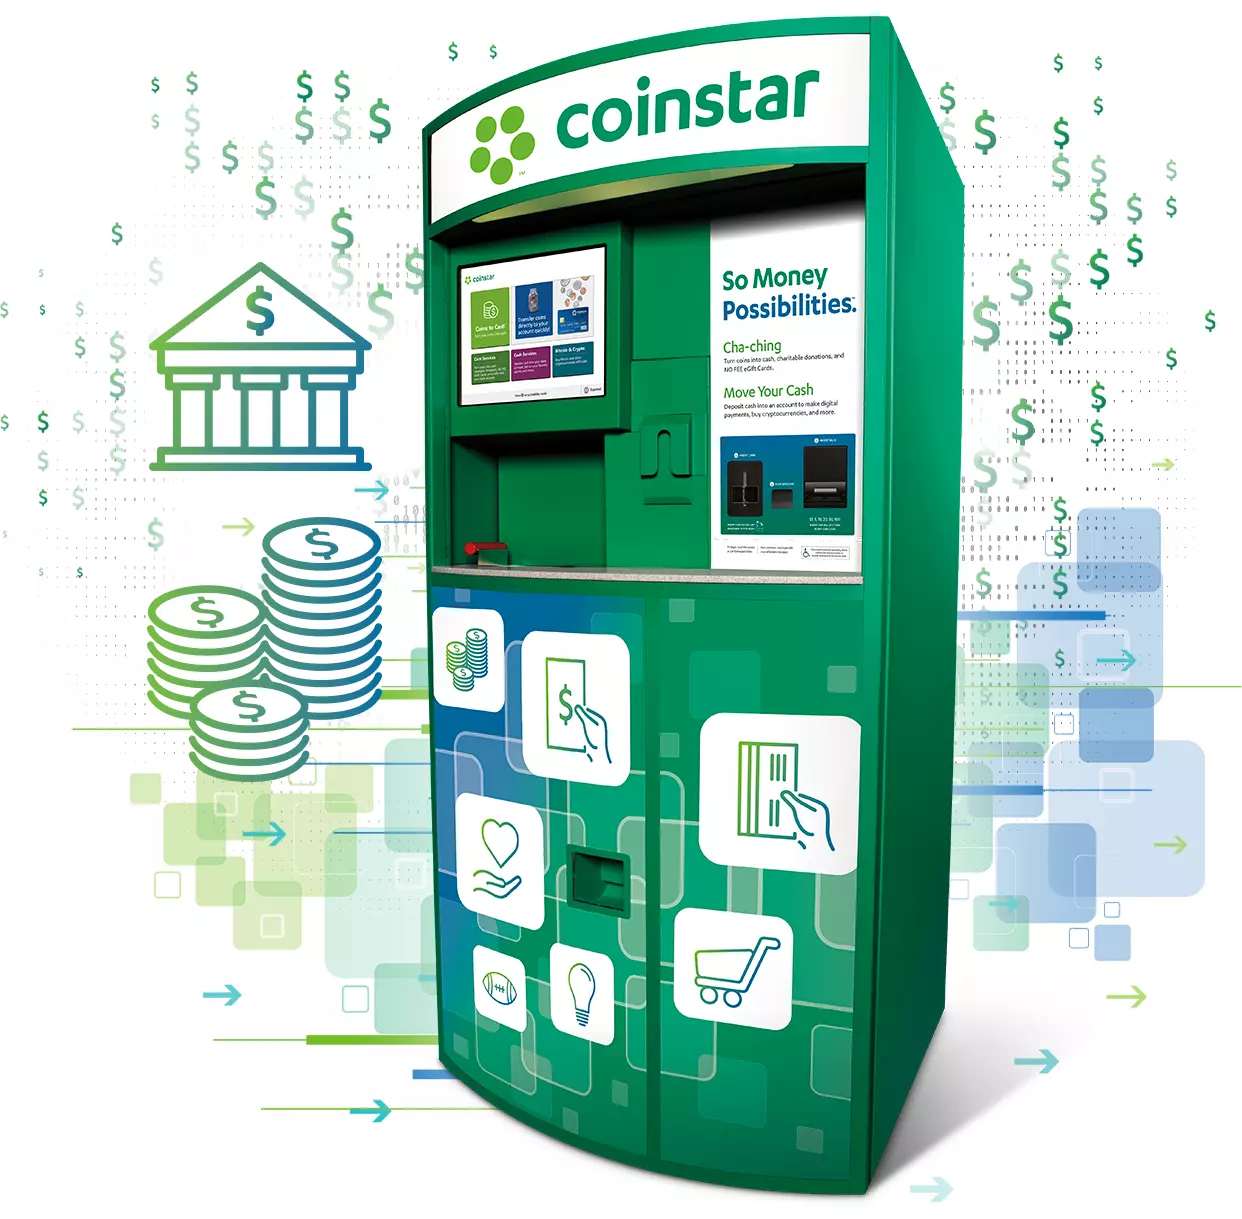 Coins & Cash to Account Kiosk